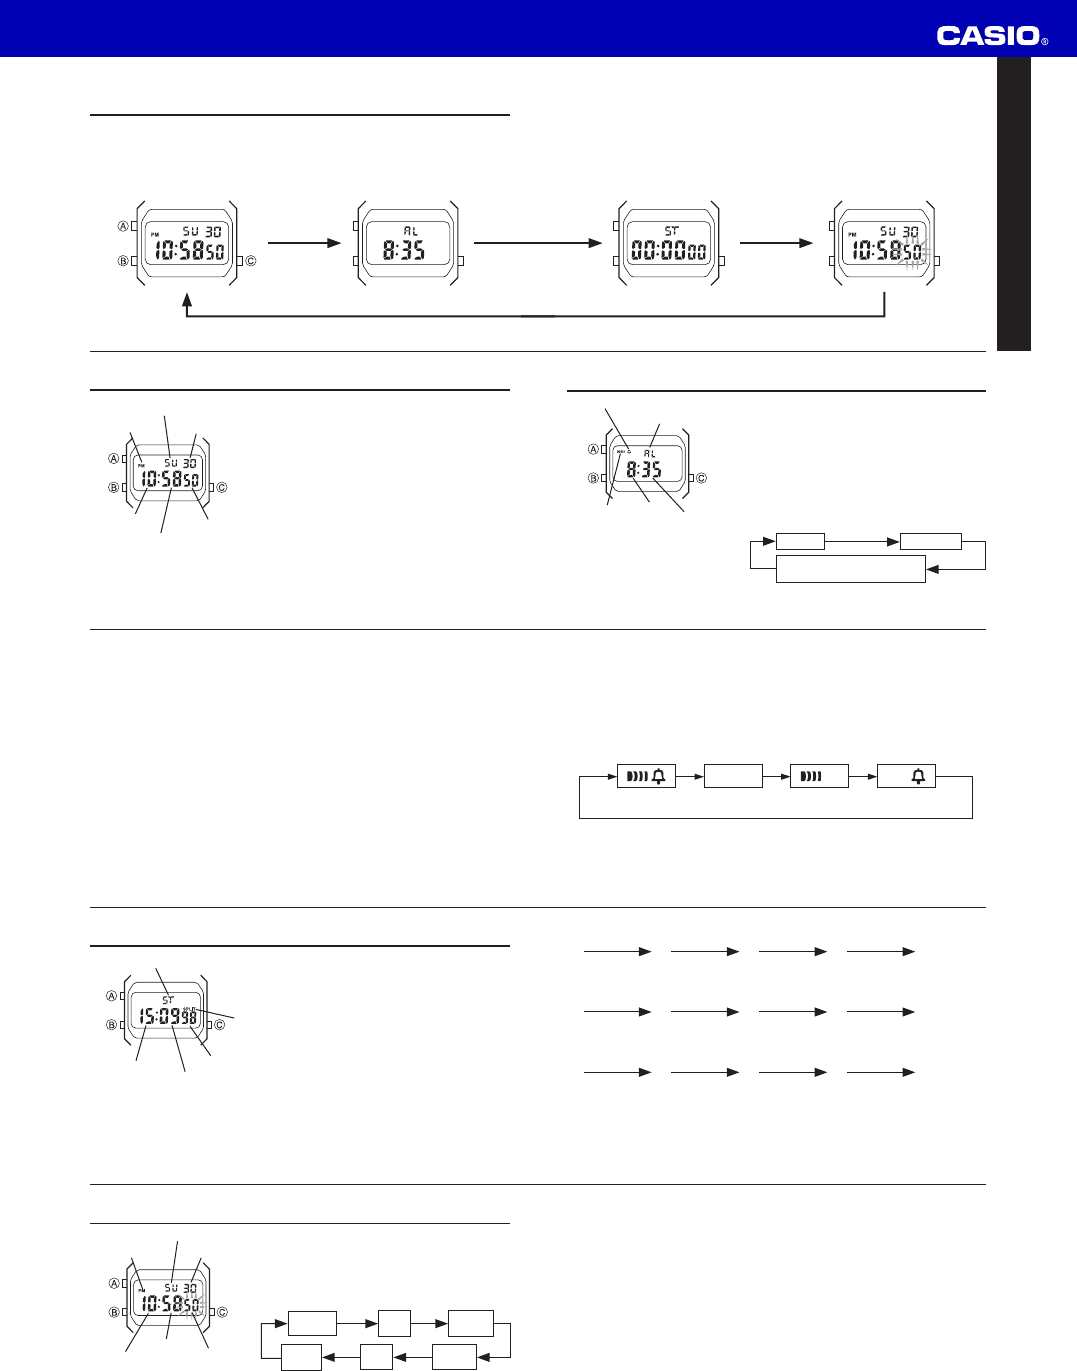 Manual Casio 3298 (page 1 of 2) (English)